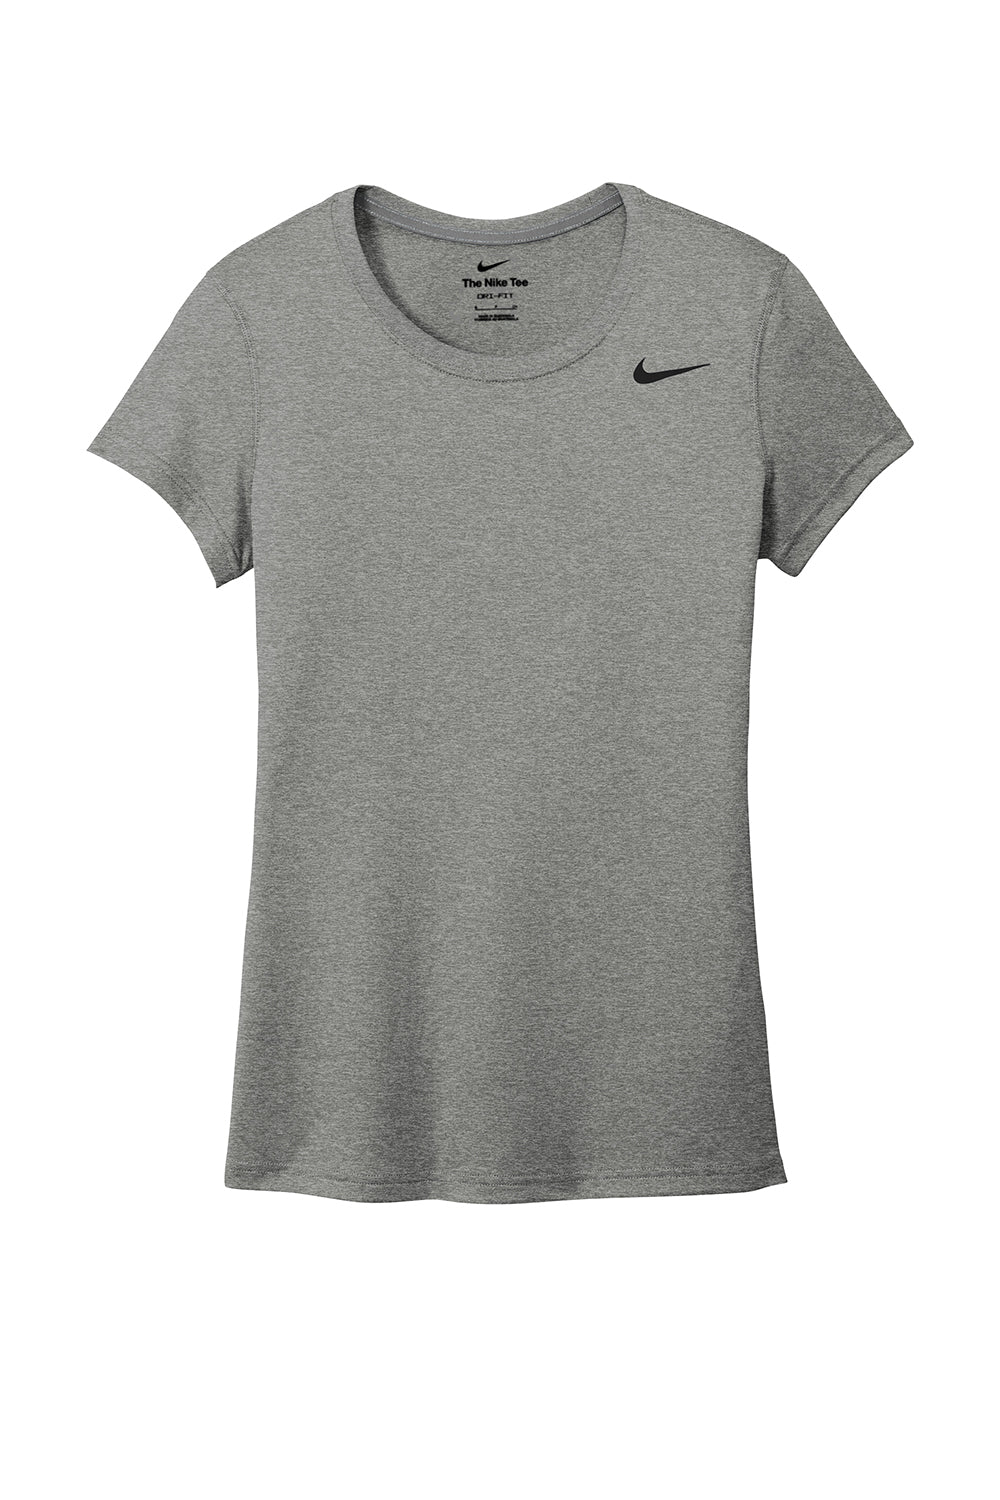 Nike DV7312 Womens Team rLegend Dri-Fit Moisture Wicking Short Sleeve Crewneck T-Shirt Heather Carbon Grey Flat Front